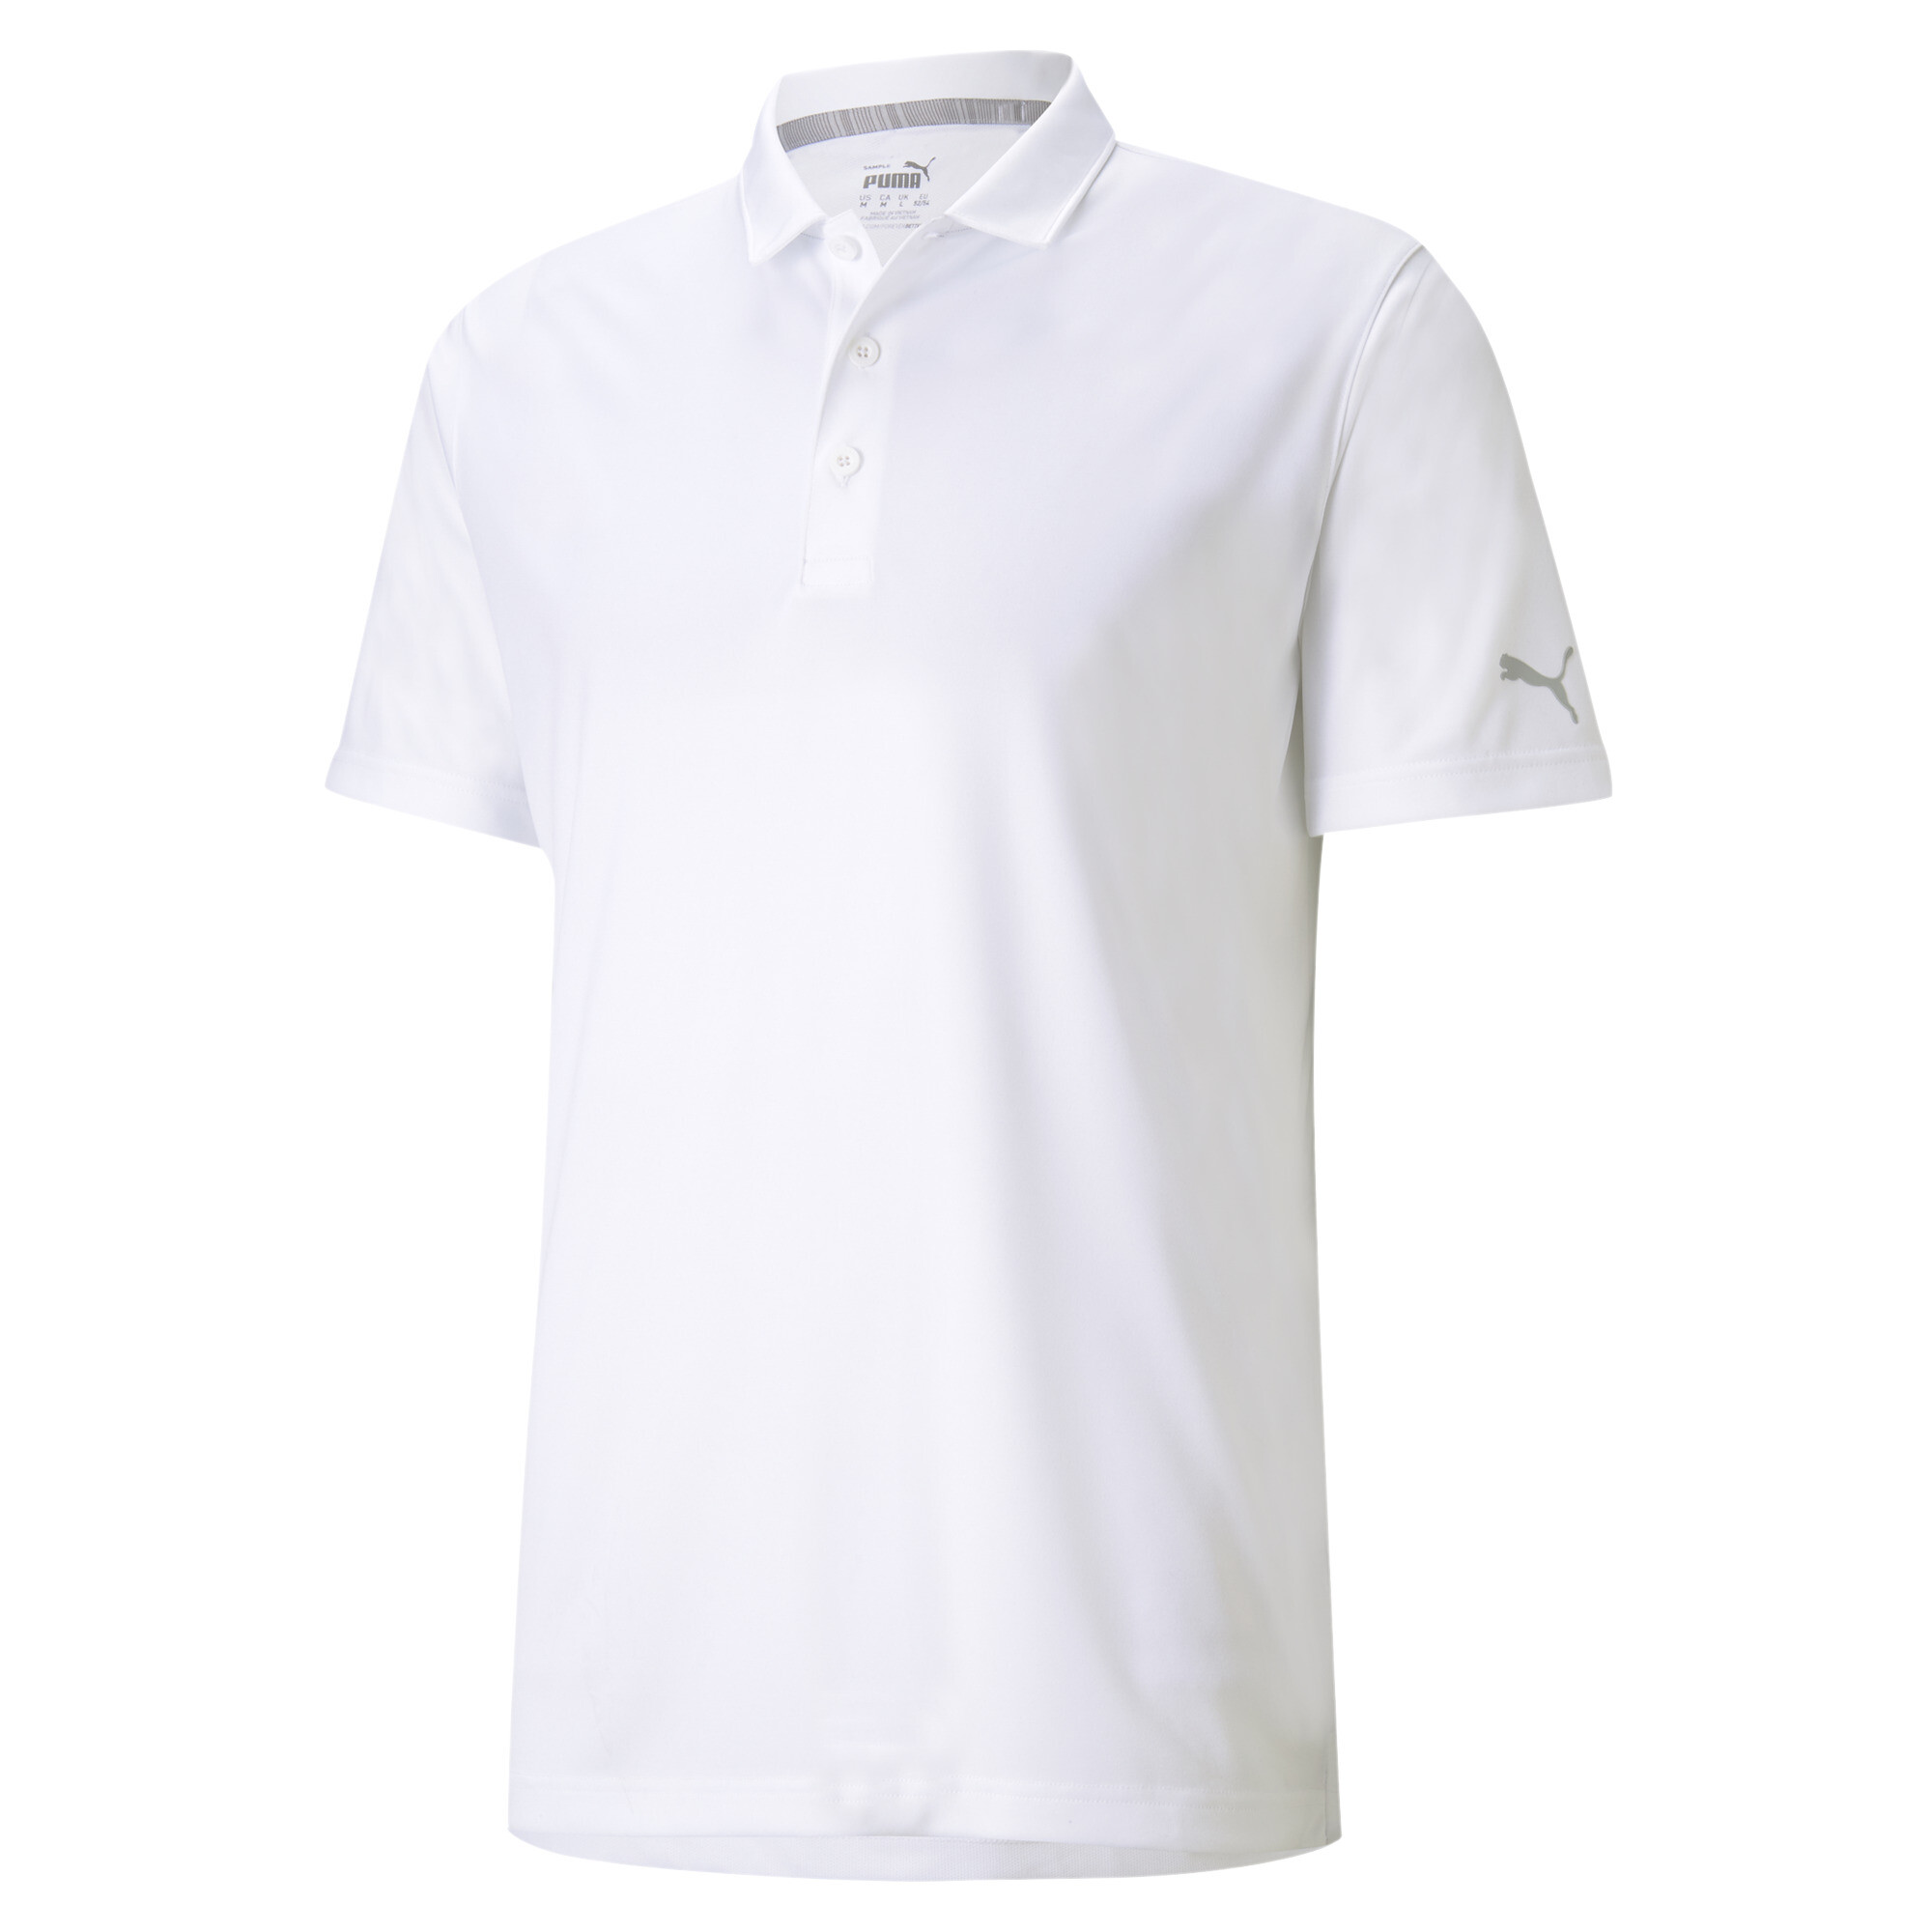 Men's Puma Gamer's Golf Polo Shirt T-Shirt, White T-Shirt, Size XL T-Shirt, Clothing